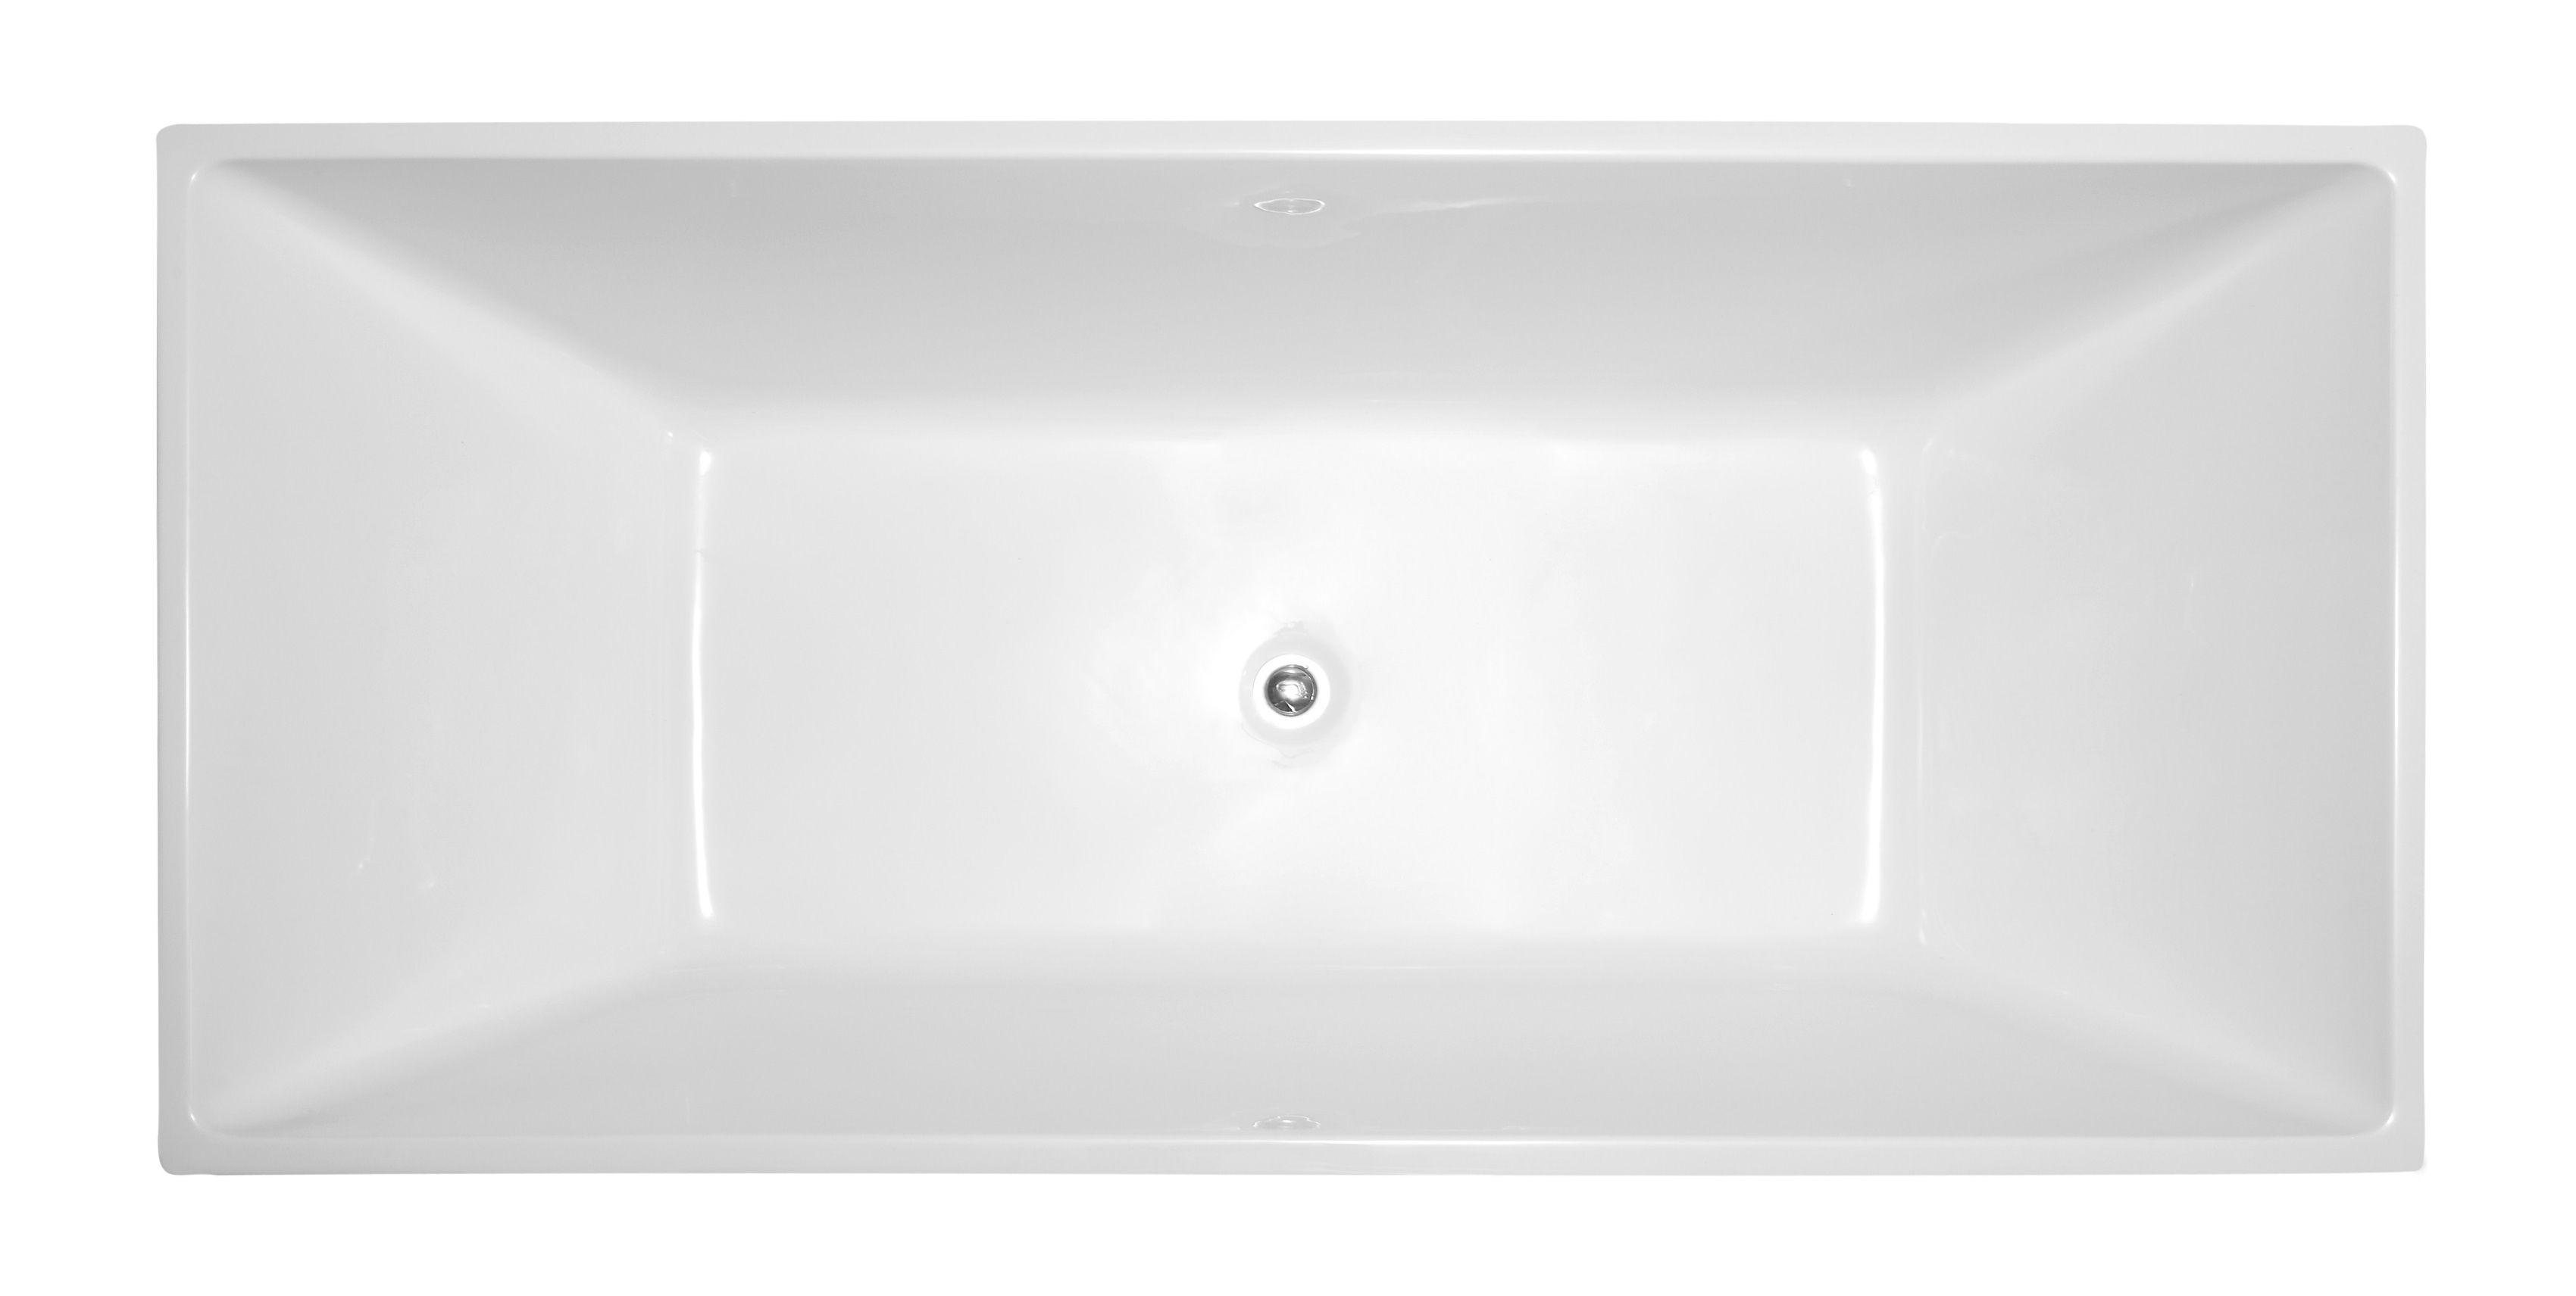 VANITY ART VA6813-L 66 7/8 INCH FREESTANDING ACRYLIC SOAKING BATHTUB WITH POP-UP DRAIN - WHITE